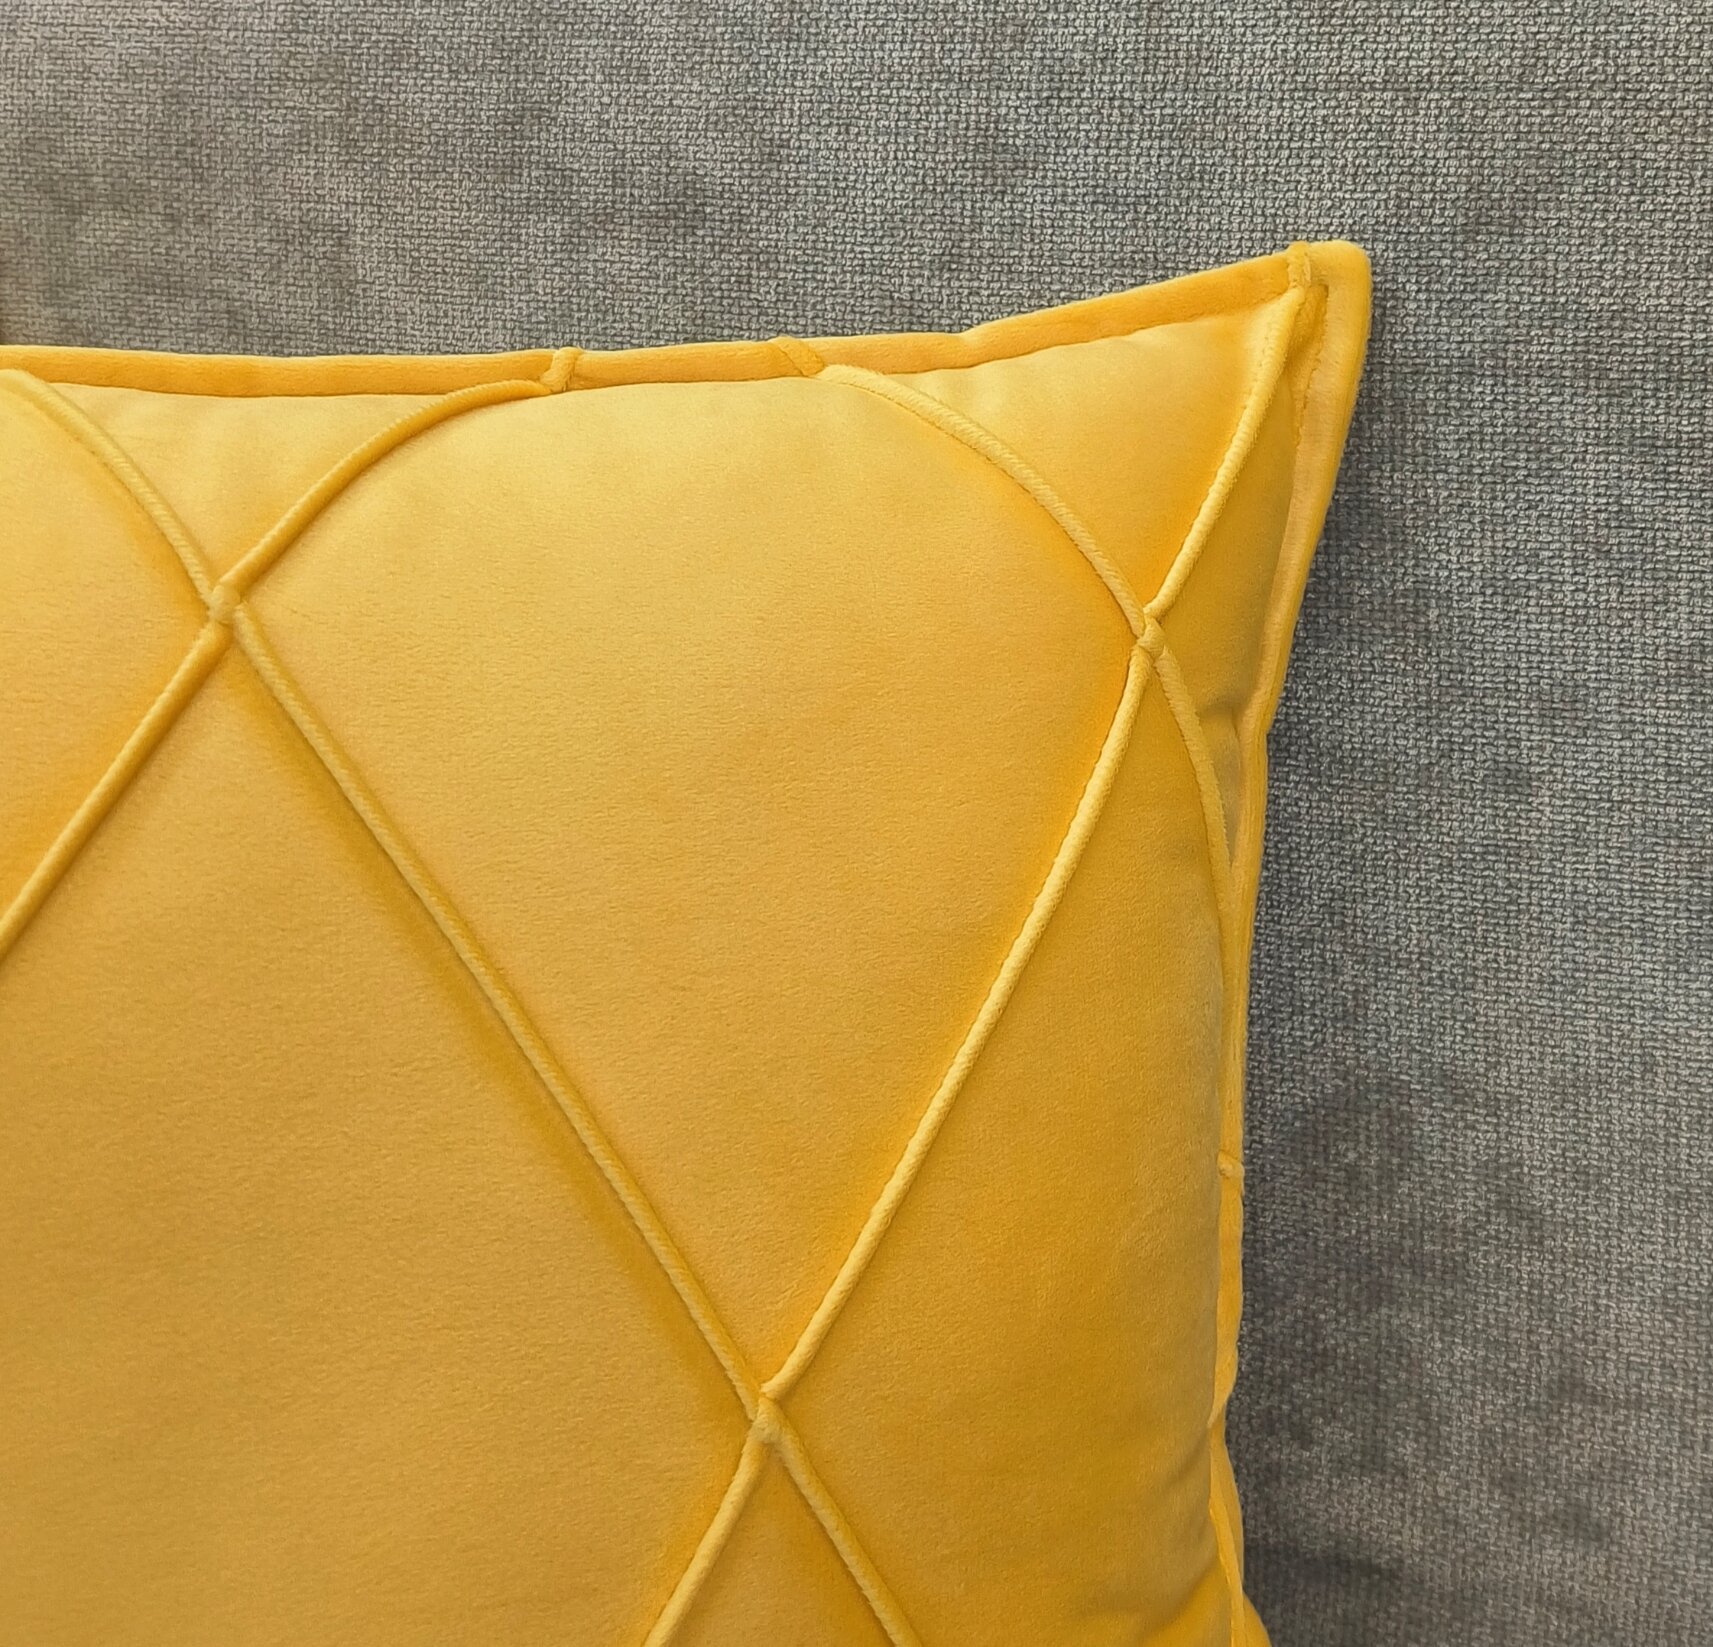 Подушка декоративная на диван 35х50 цвет желтый